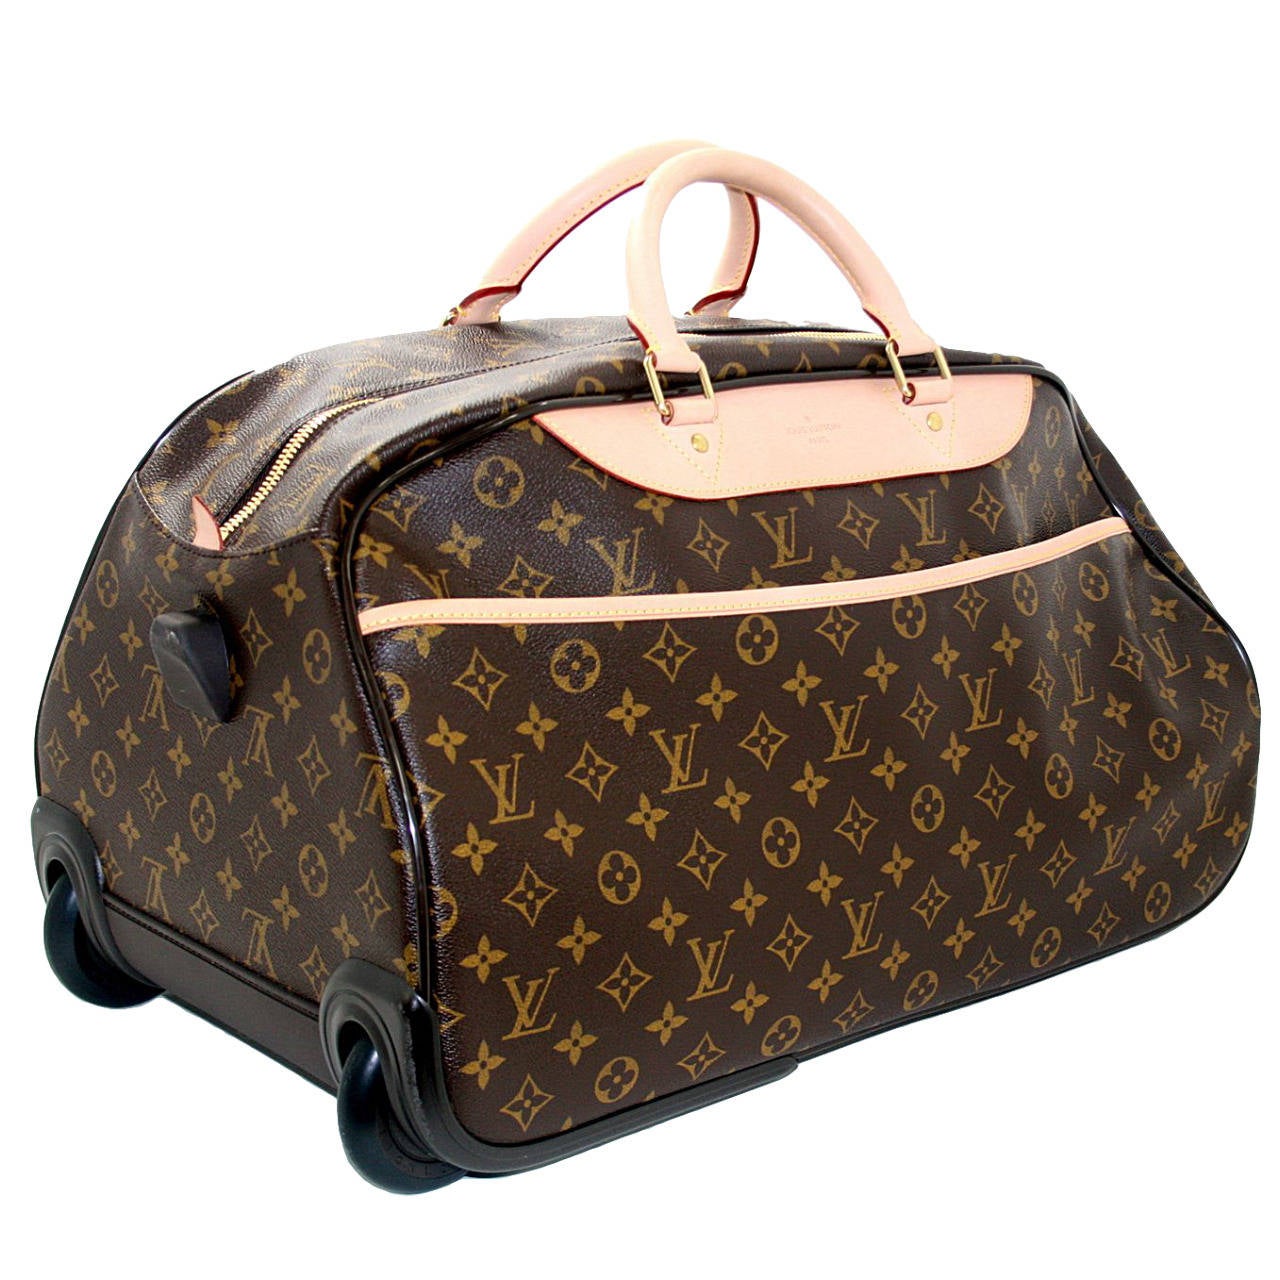 Luxury Duffle Bag With Wheels | IQS Executive